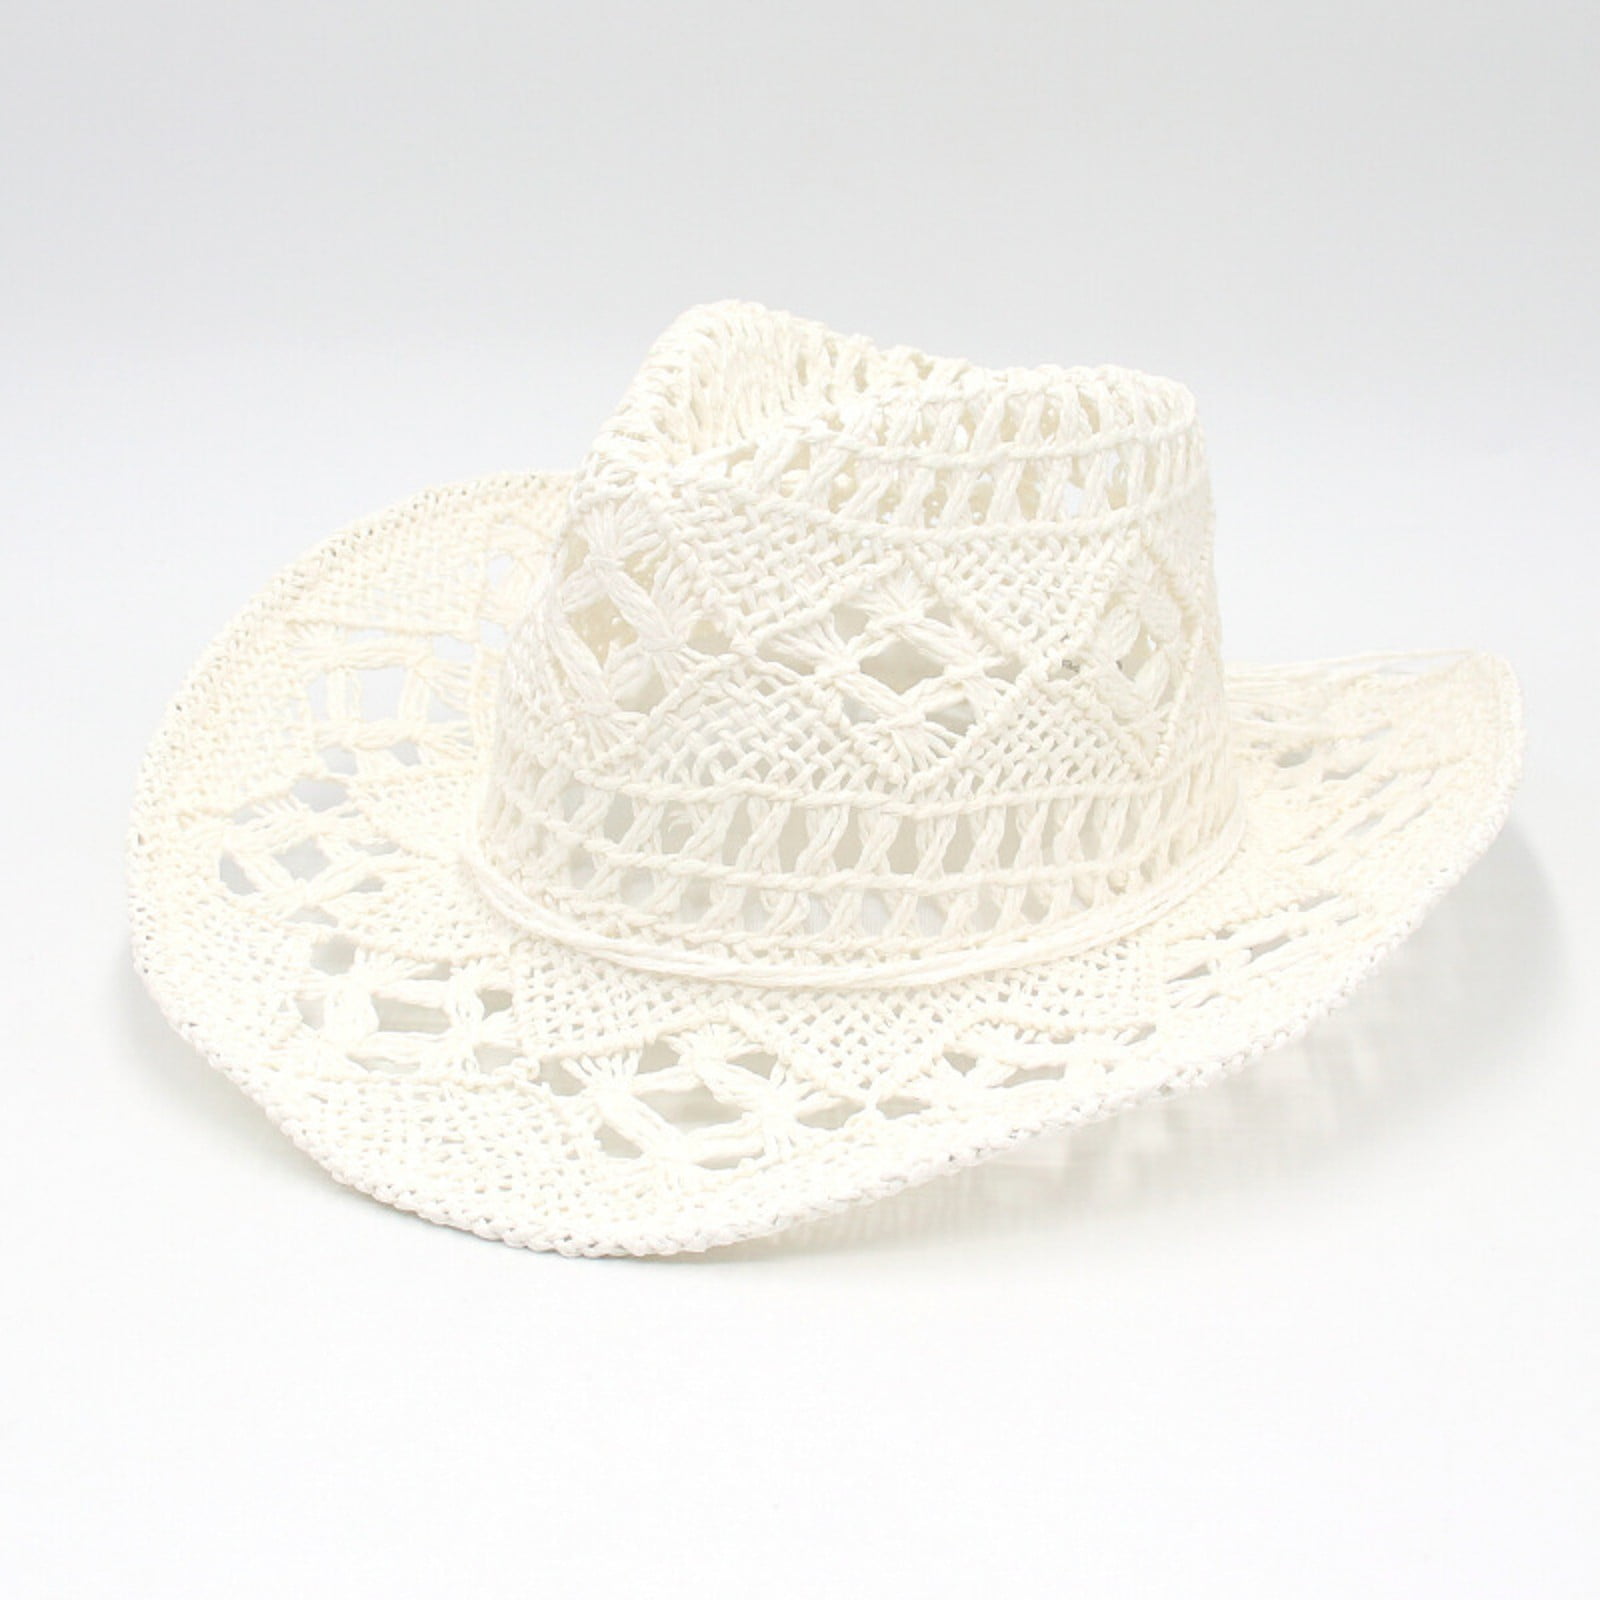 nochalofo White Floppy Beach Hats for Women Outdoor Sun Fashionable Boho, Men's, Size: 15